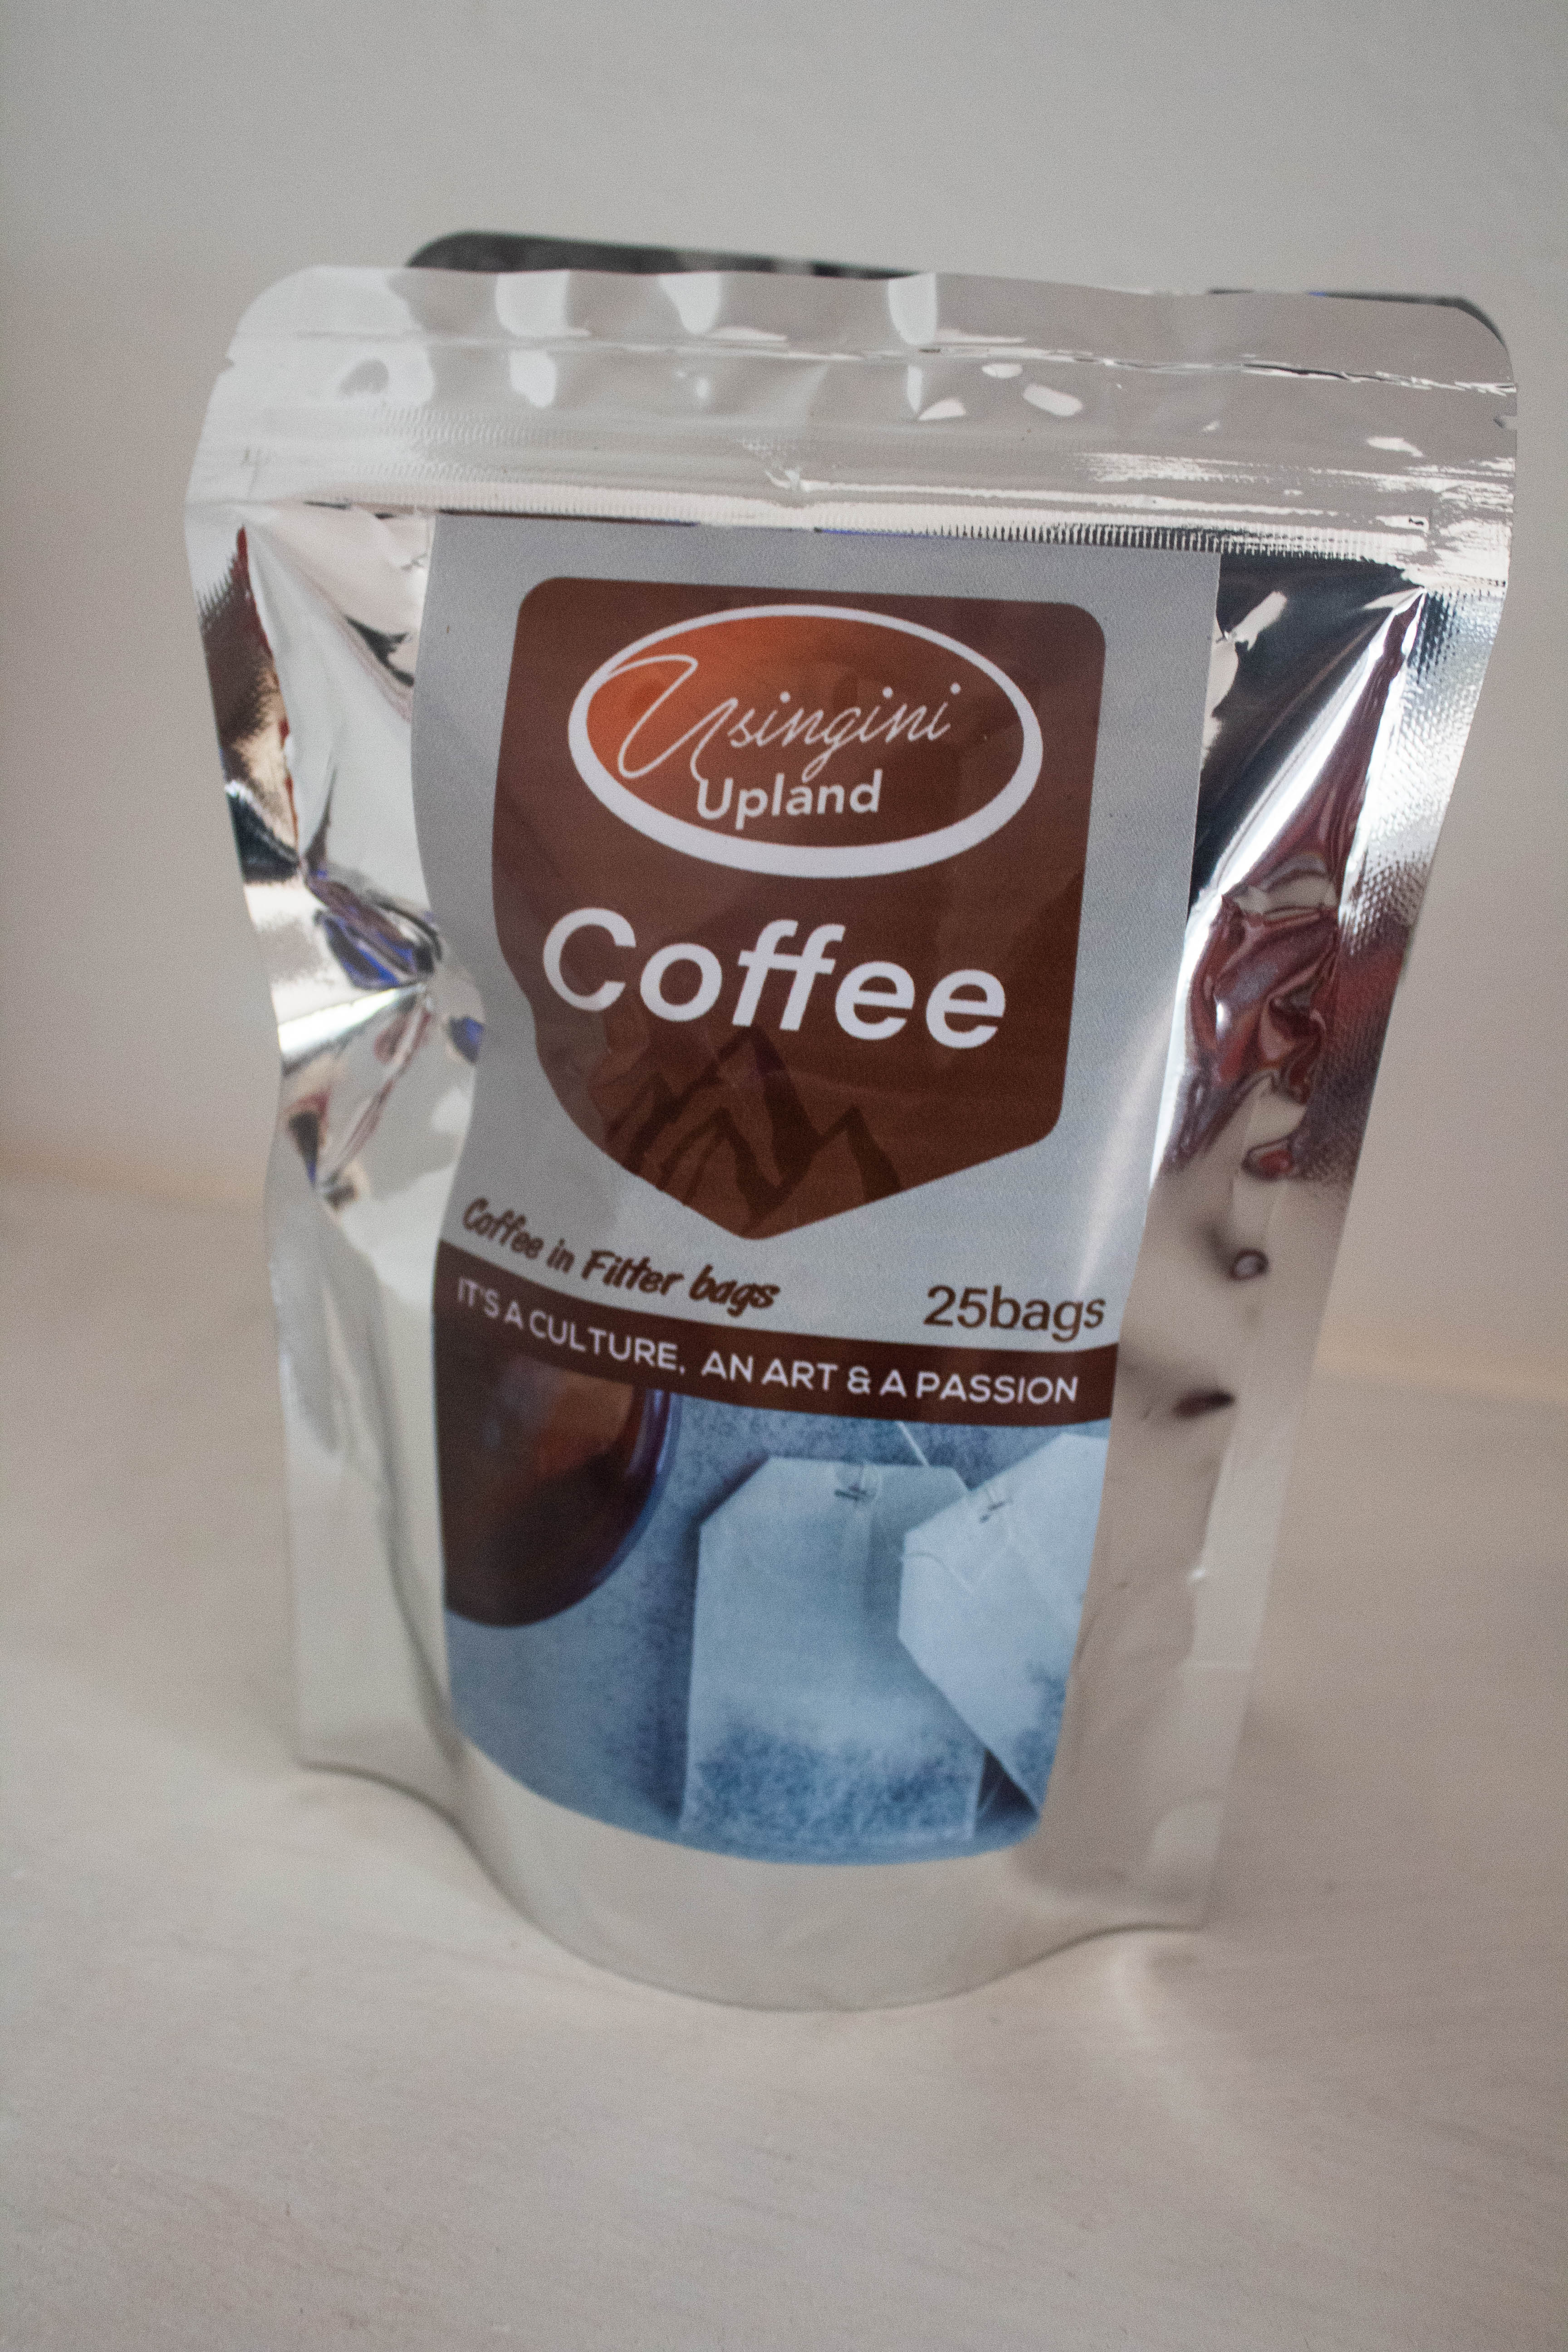 Usingini Upland Coffee (coffee In Filter Bags)